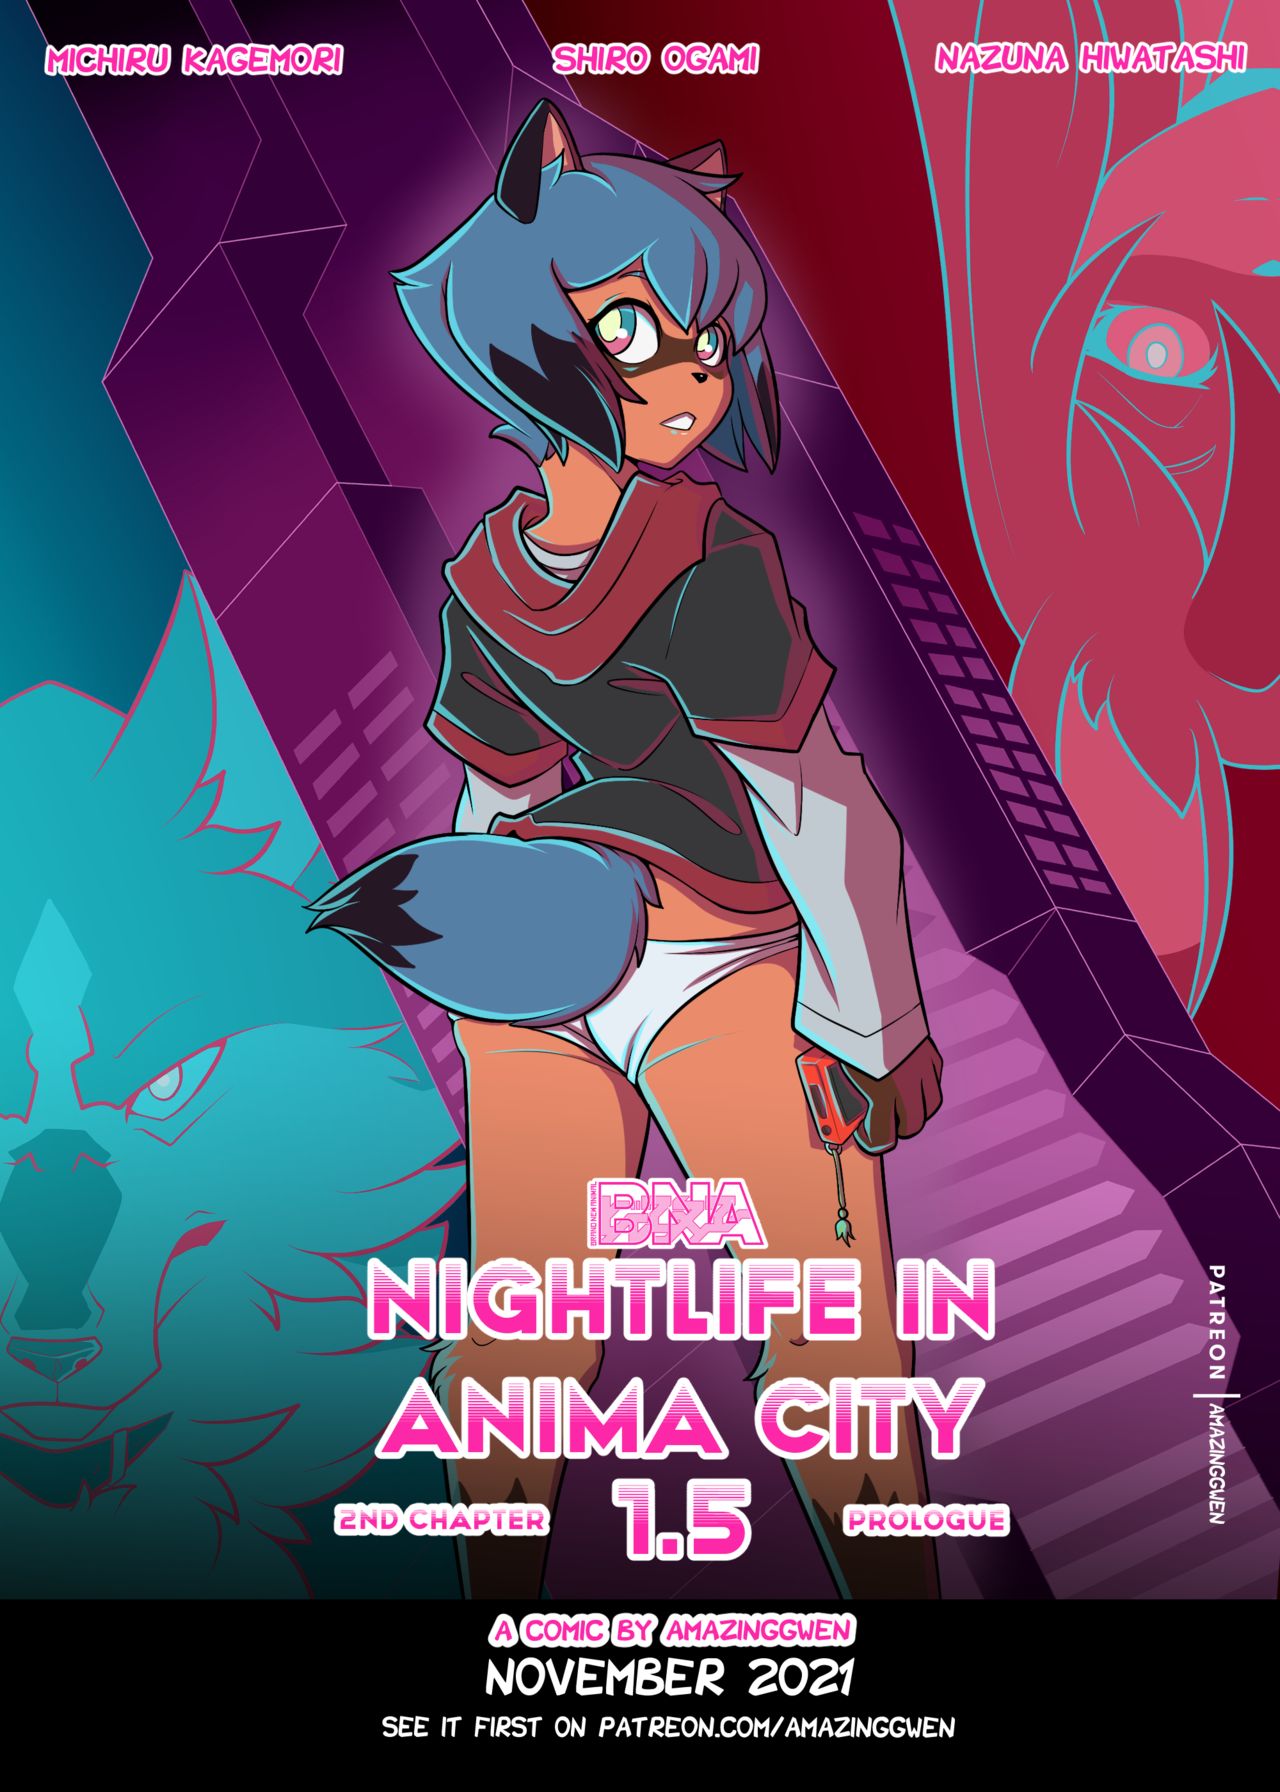 Nightlife In Animacity 1.5 by Amazinggwen